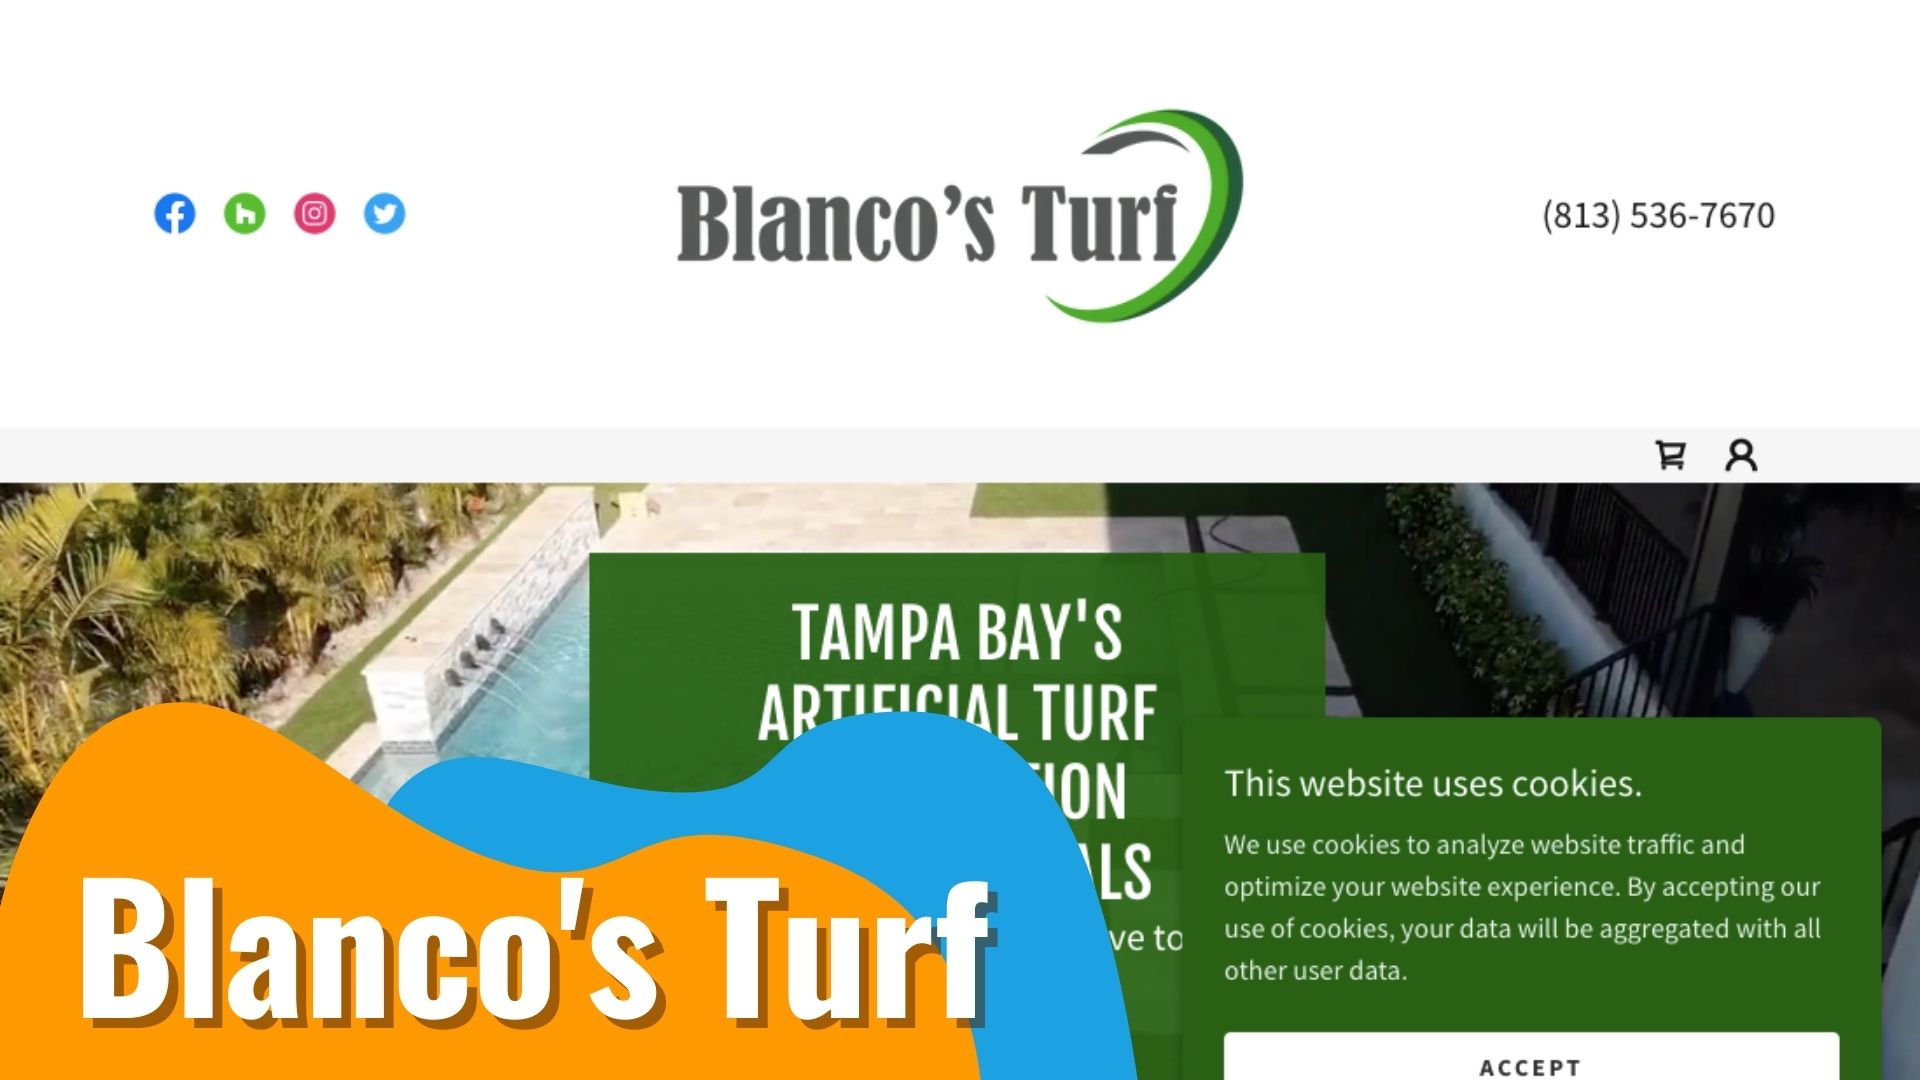 Blancos Turf Tampa